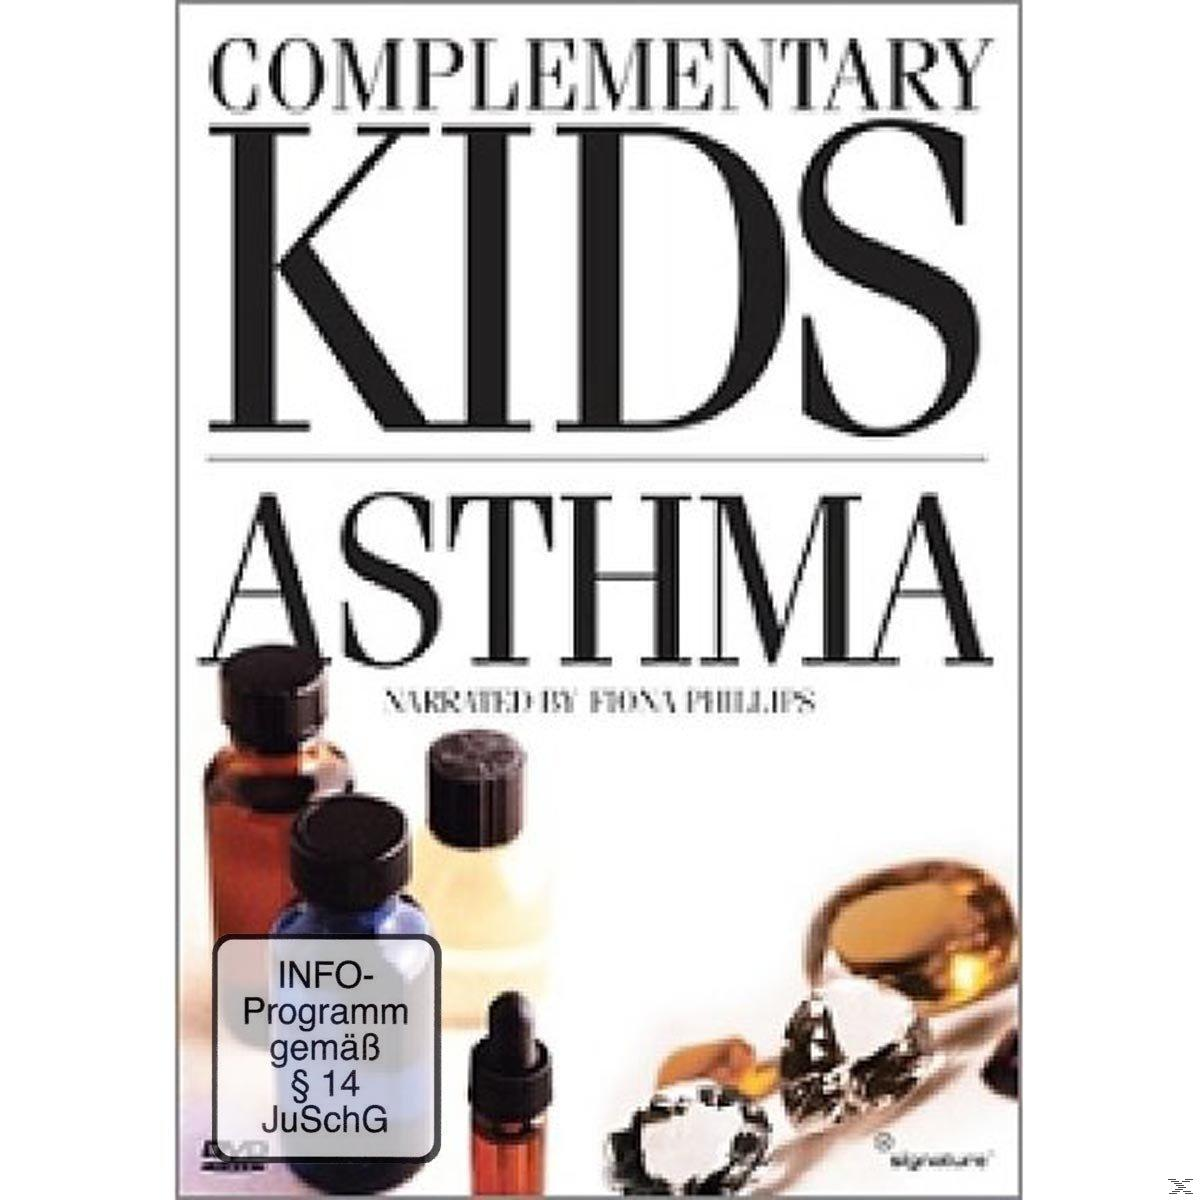 Complementary Asthma Kida DVD